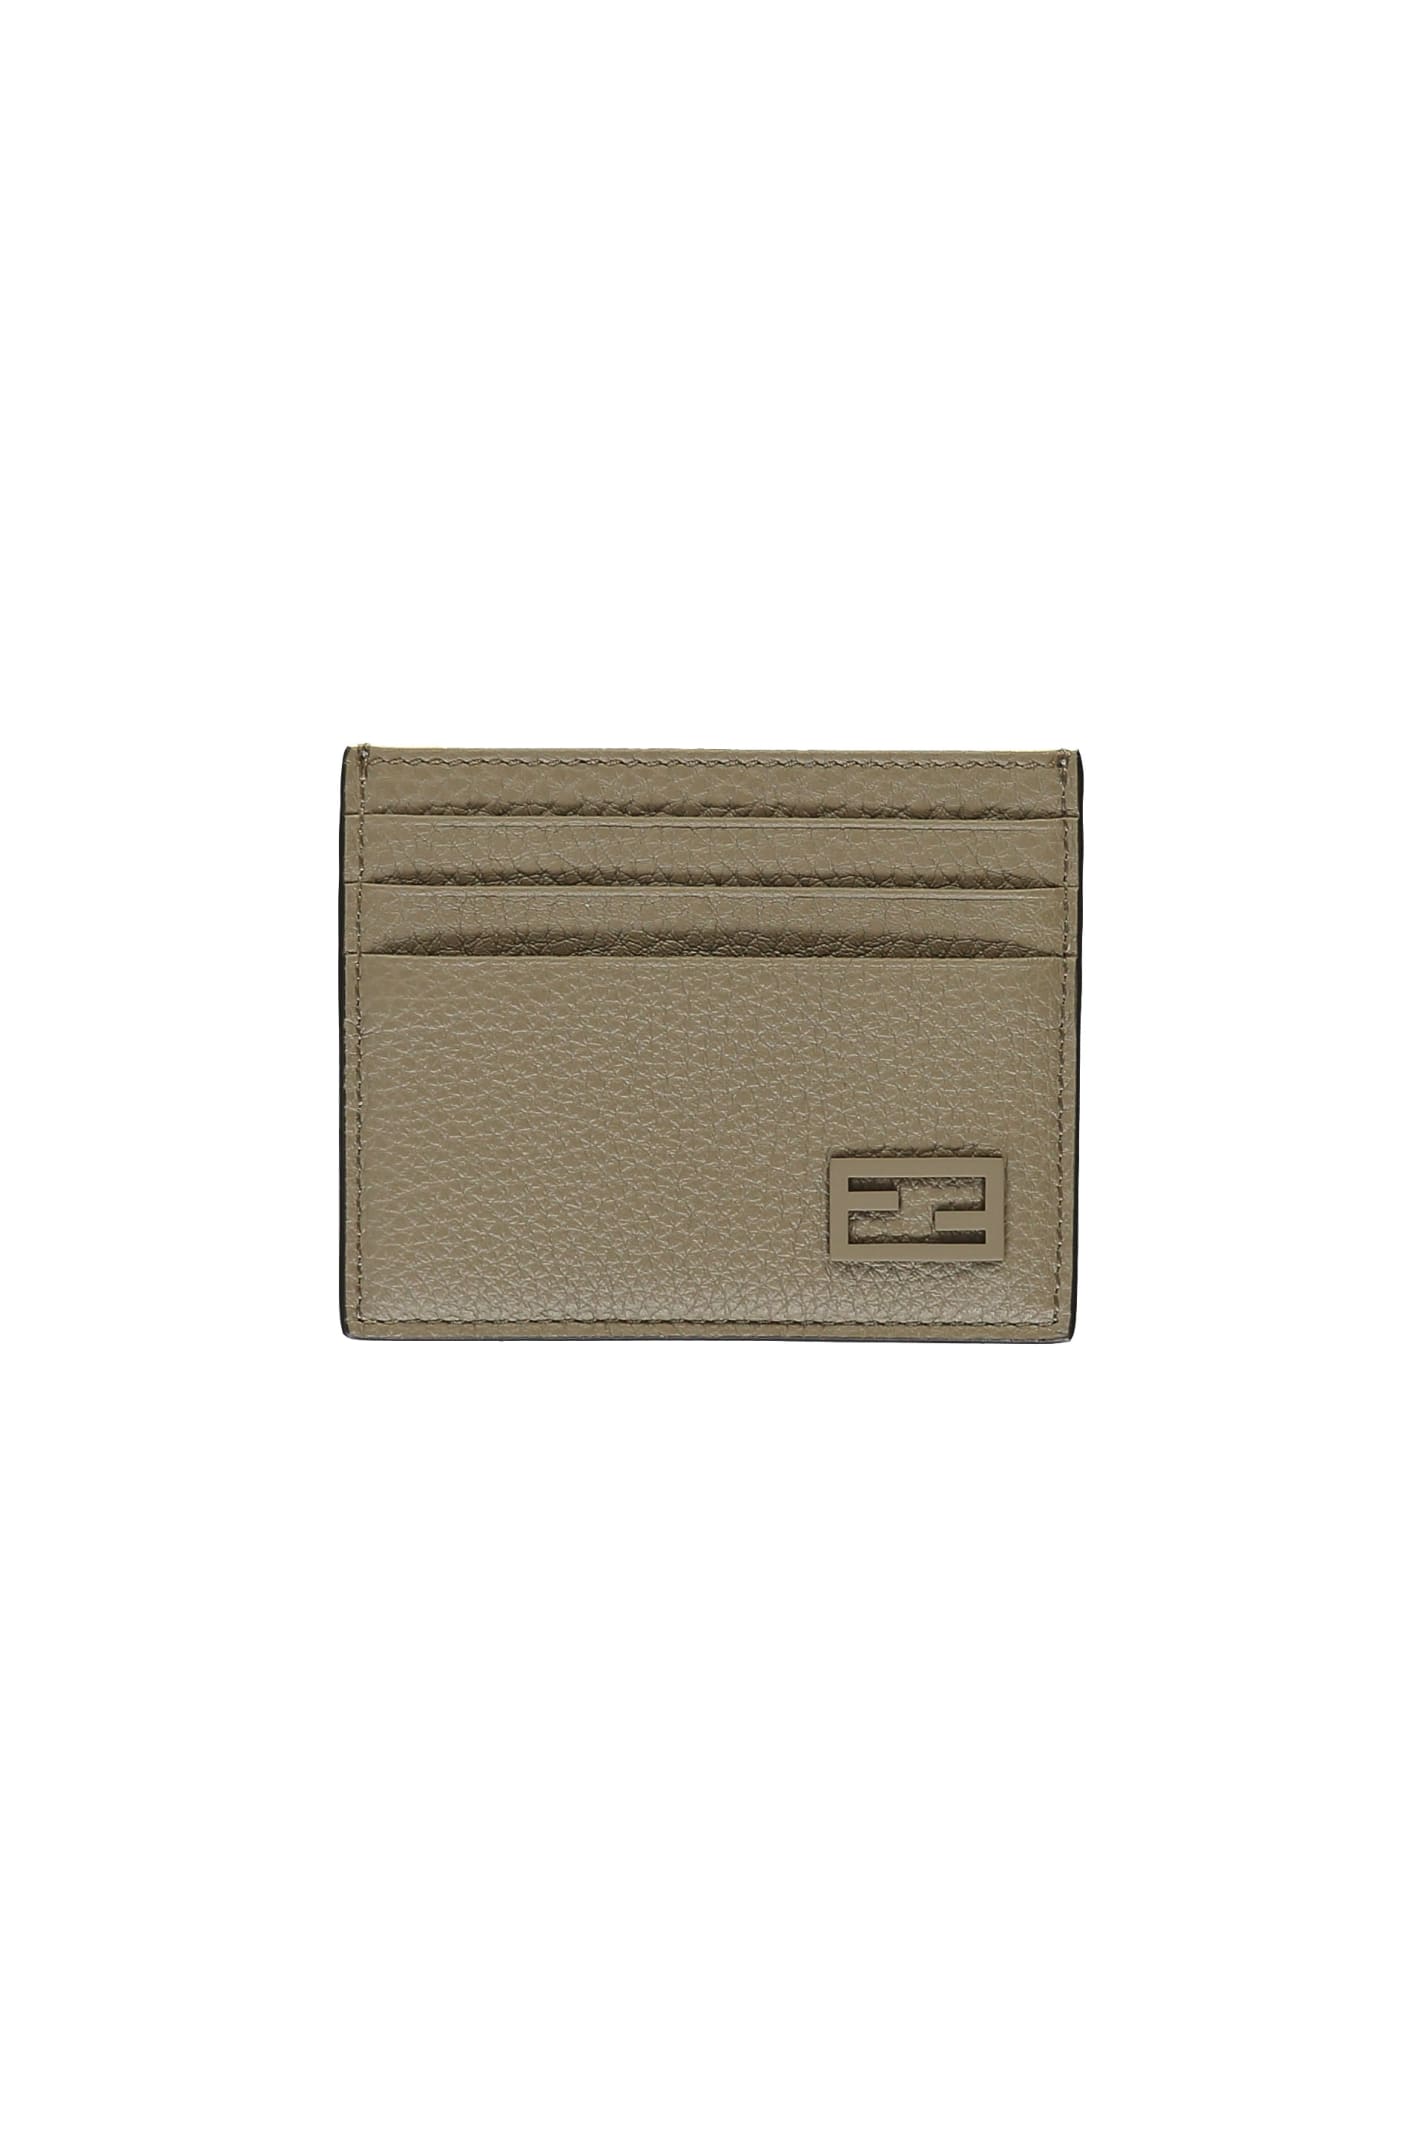 Fendi Leather Card Holder